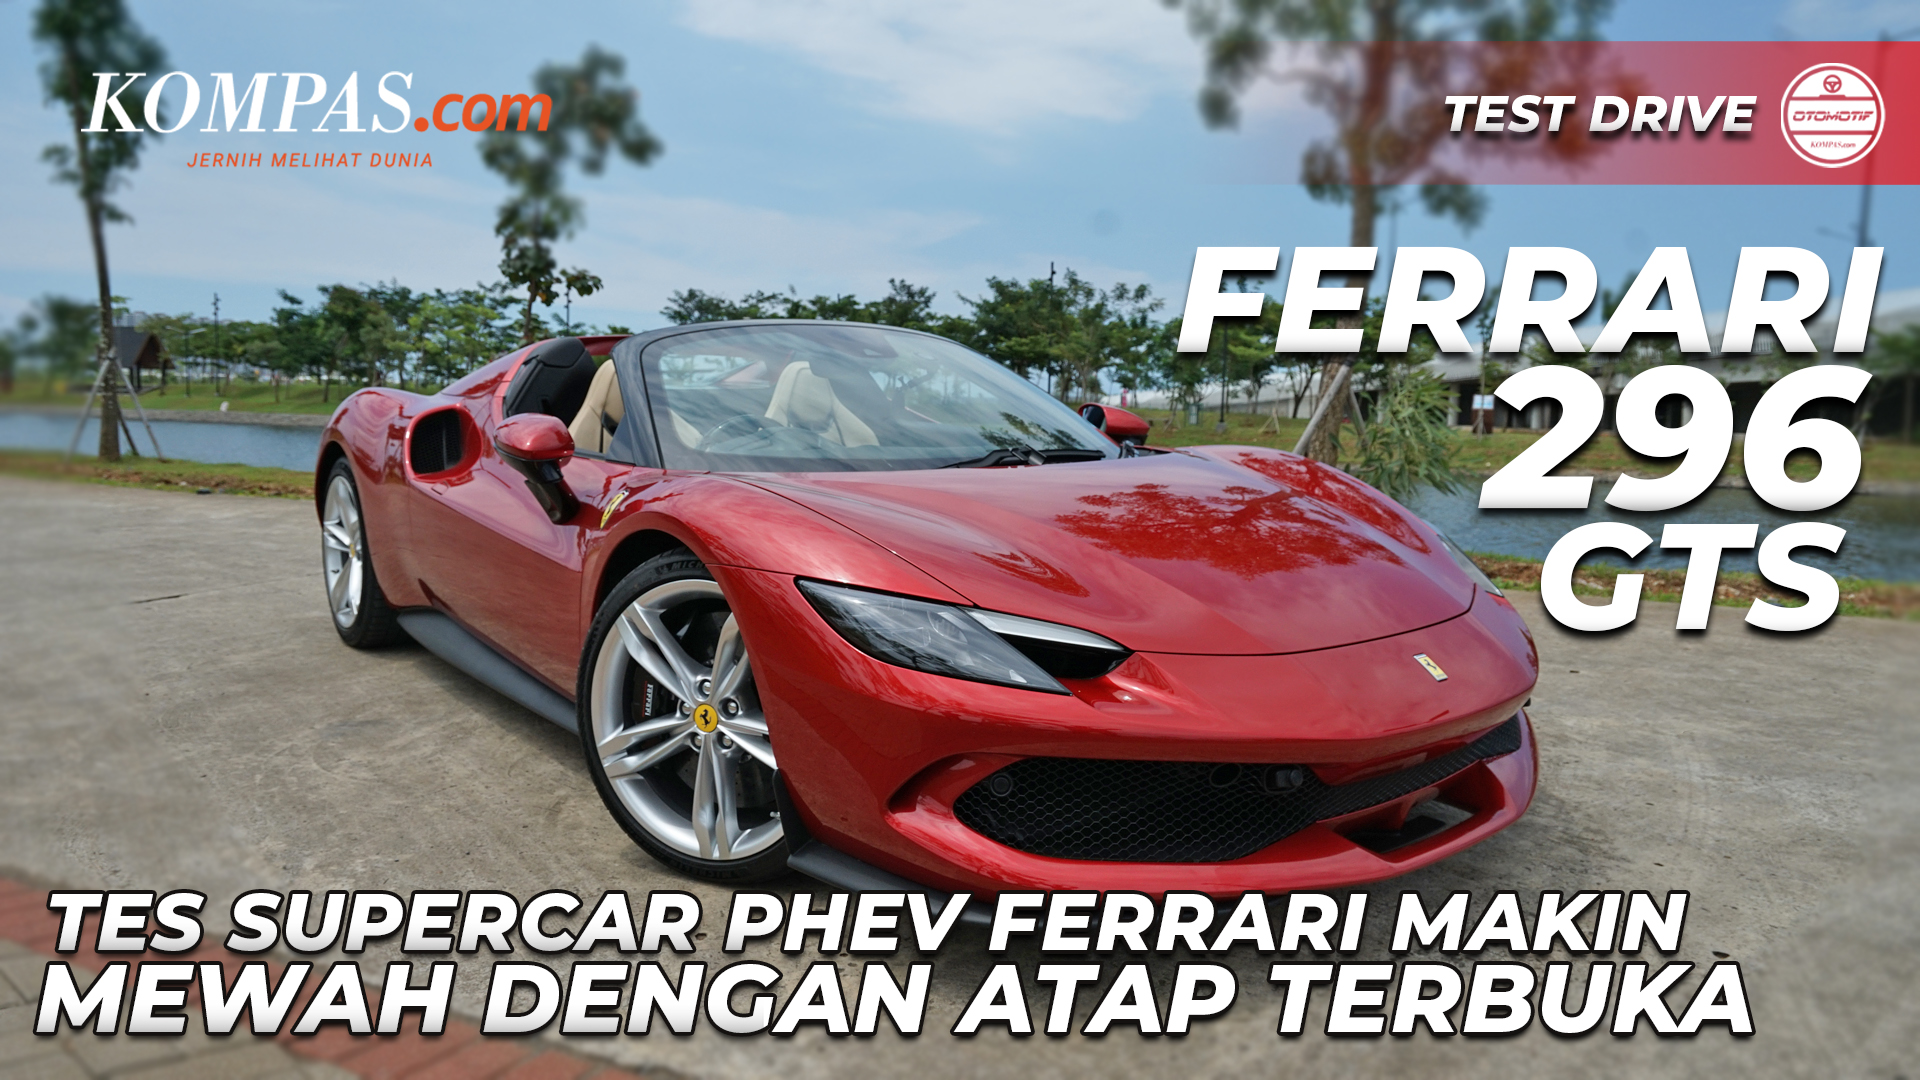 TEST DRIVE | Ferrari 296 GTS | Tes Supercar PHEV Ferrari Semakin Mewah Dengan Atap Terbuka